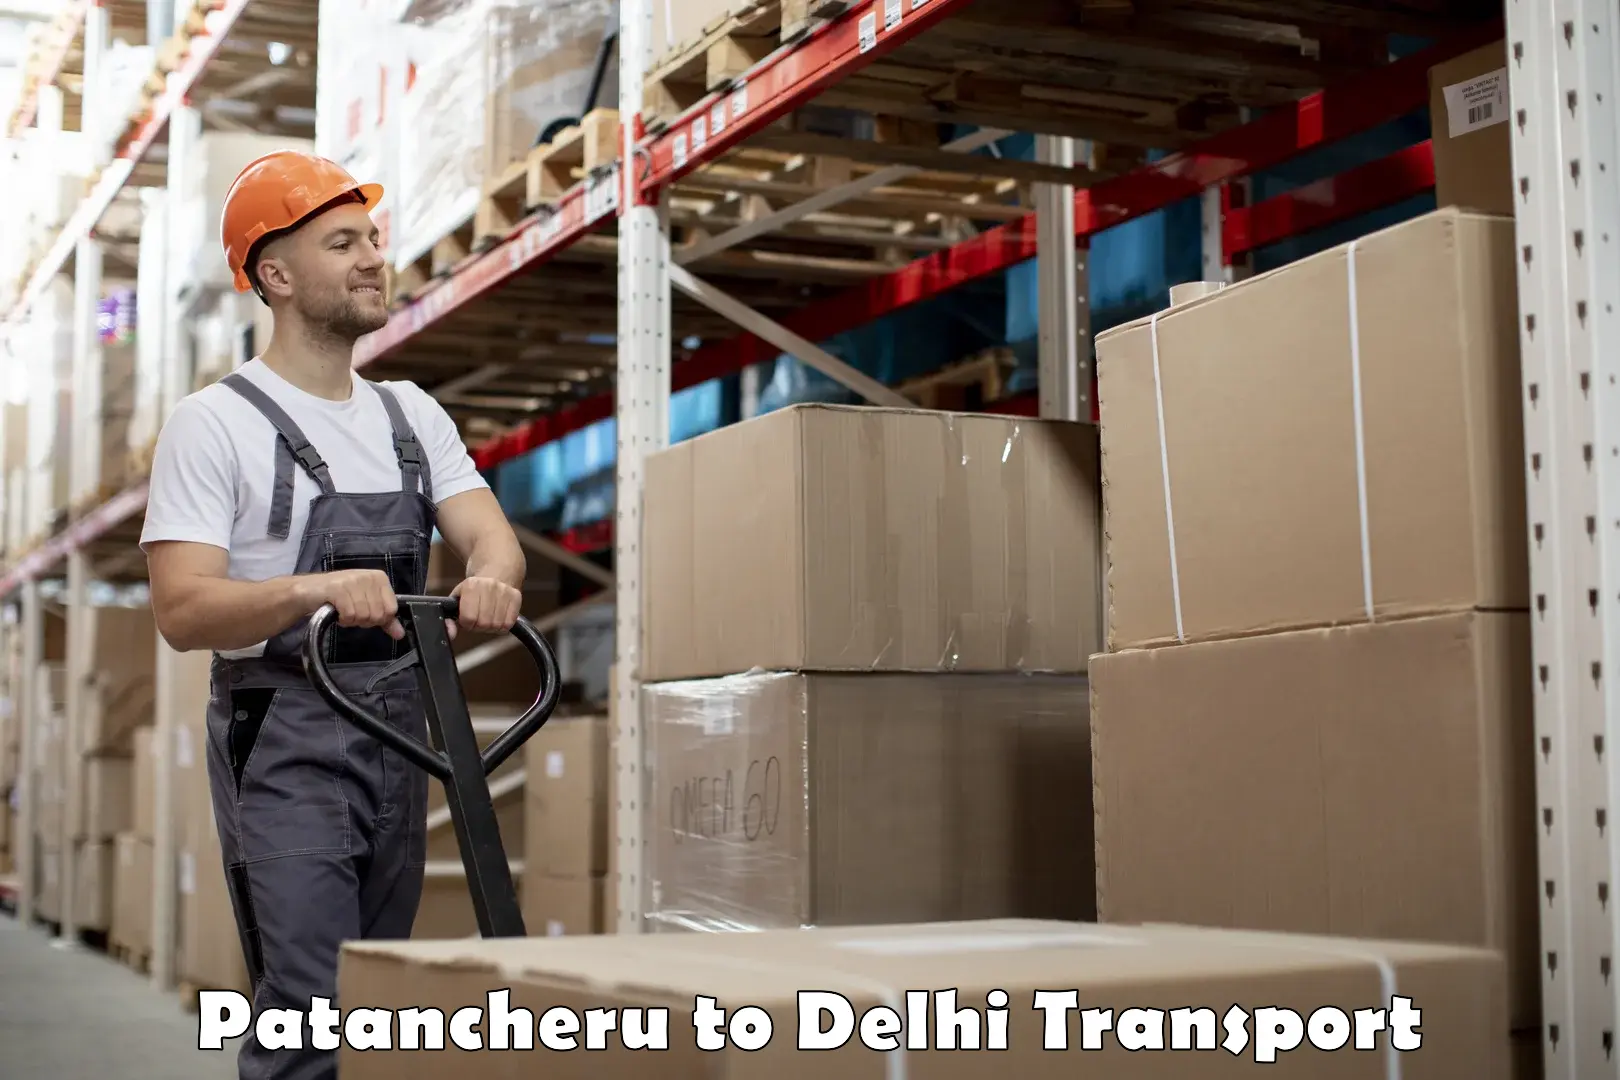 Truck transport companies in India Patancheru to Delhi